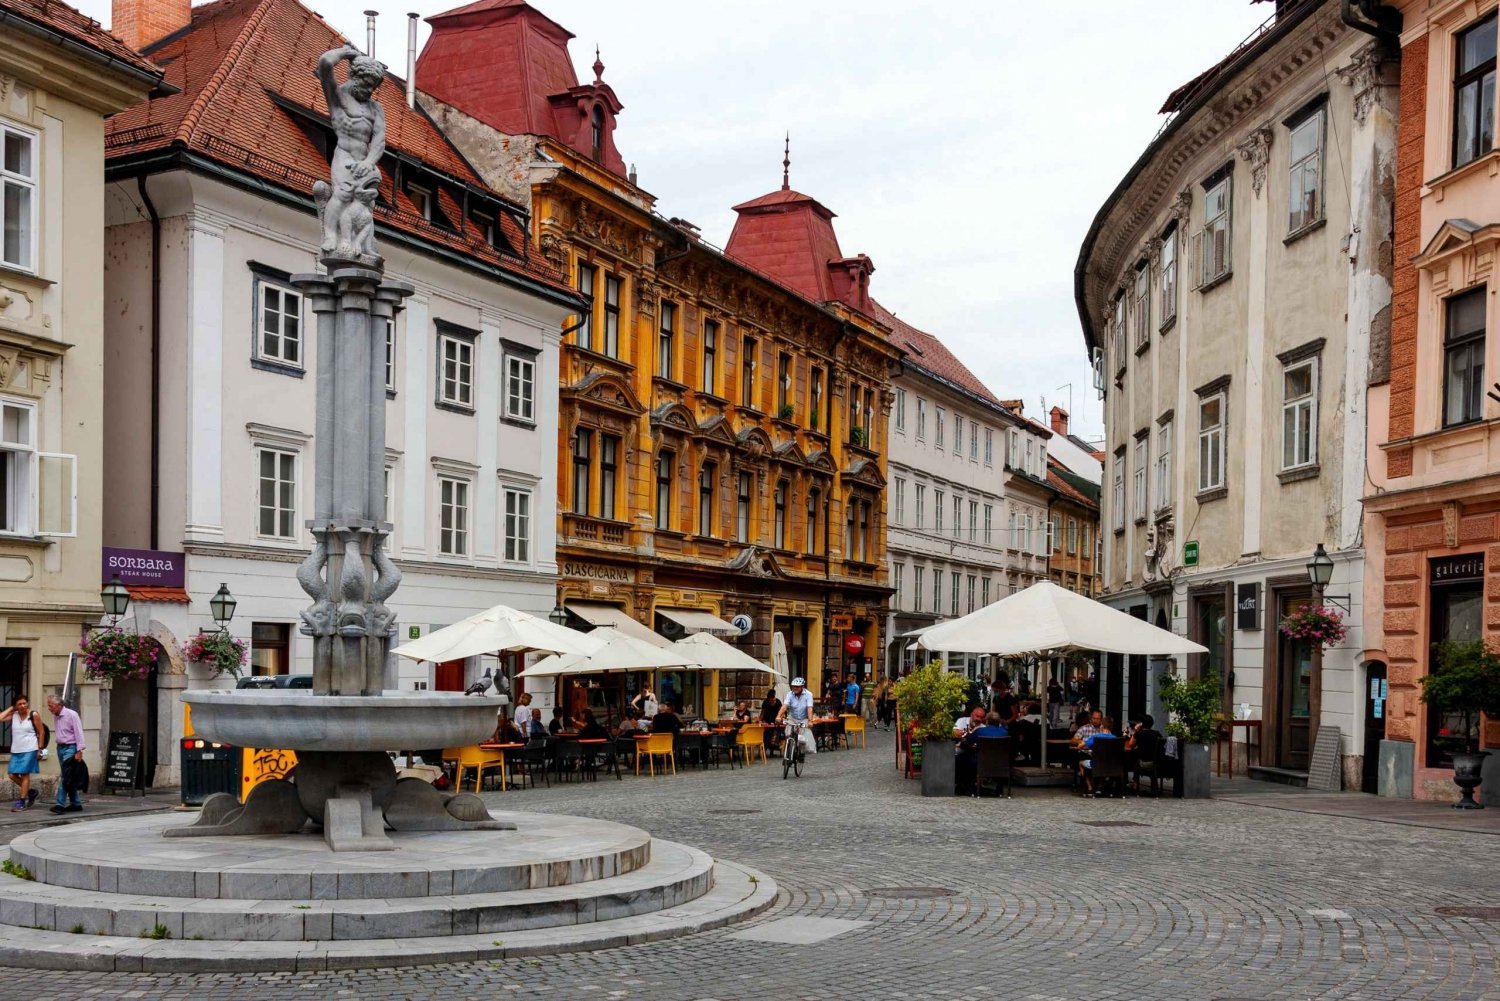 Ljubljana: Sherlock Holmes Murder Mystery Game